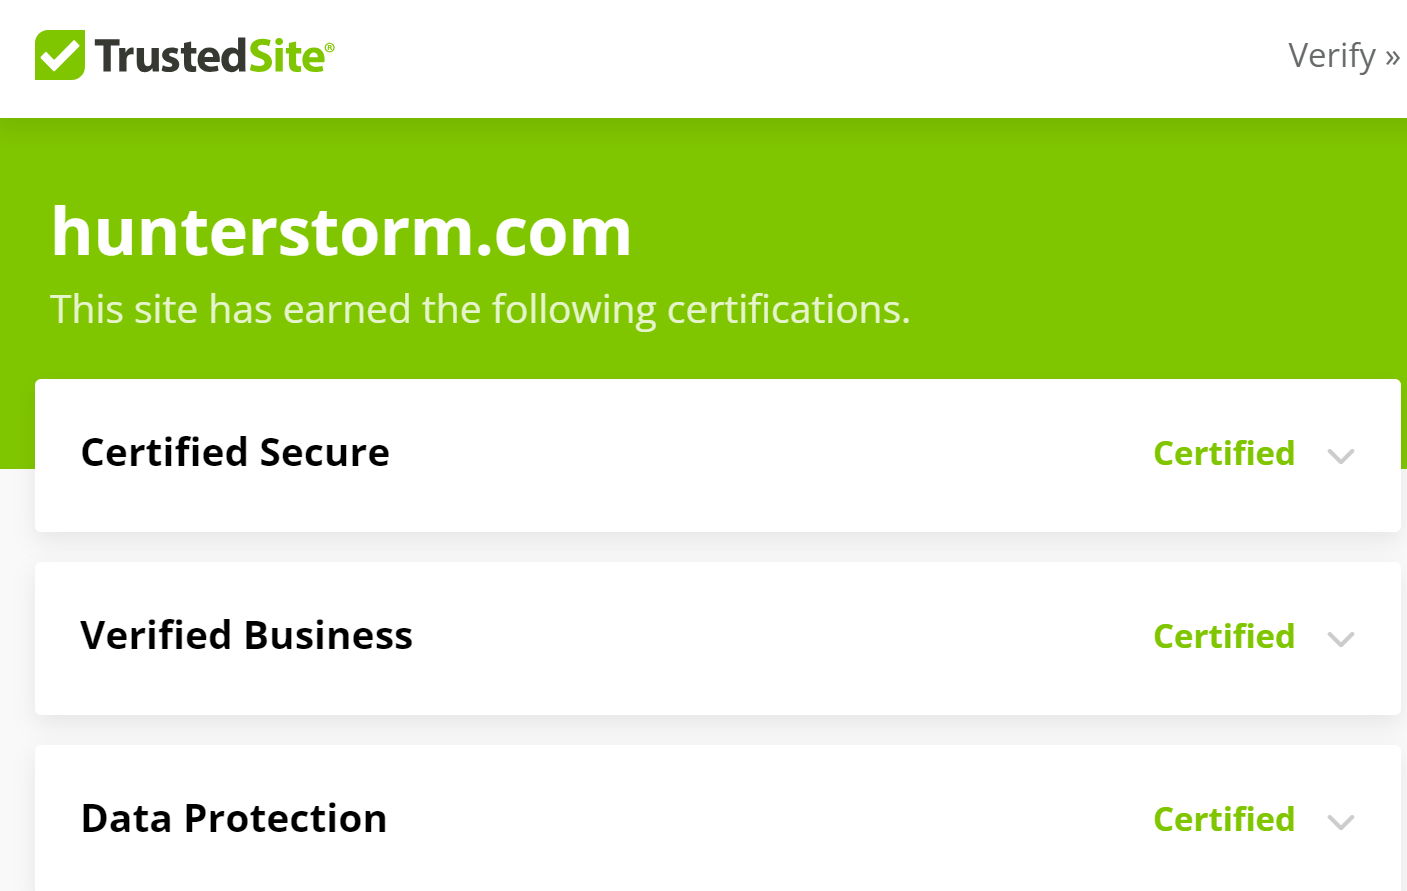 TrustedSite Trust Seal Certifications for HunterStorm.com